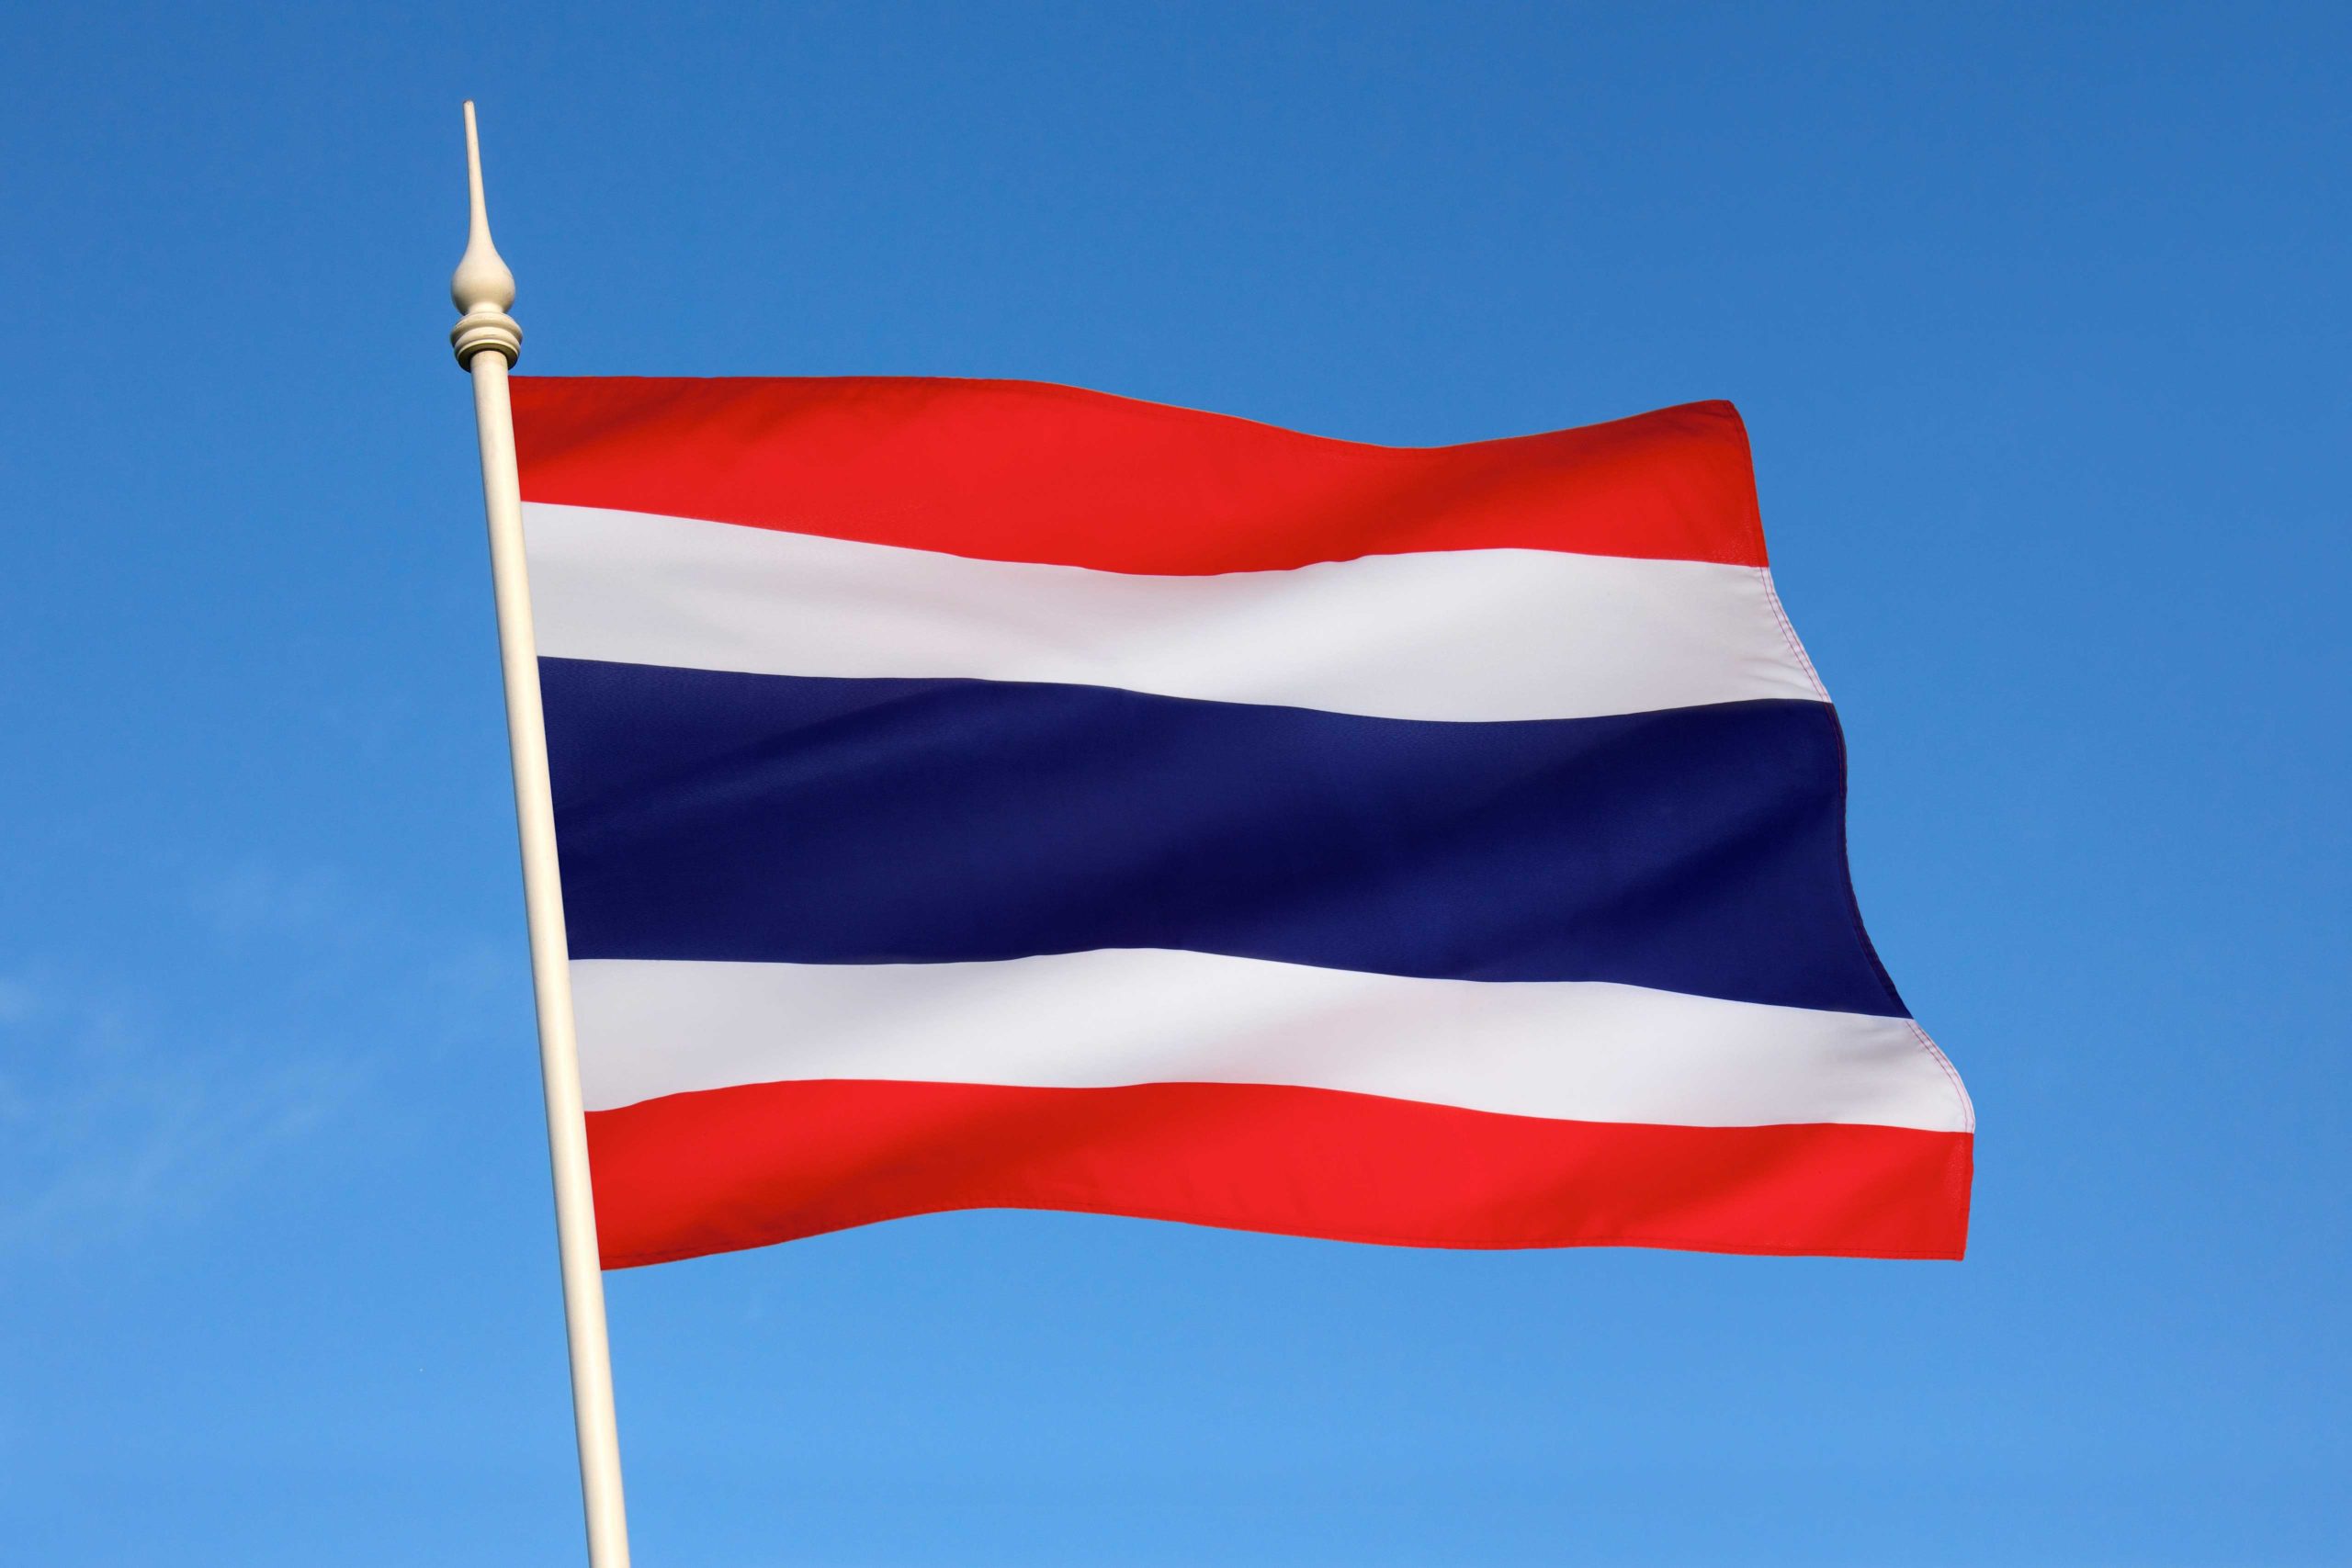 Thailand flag image